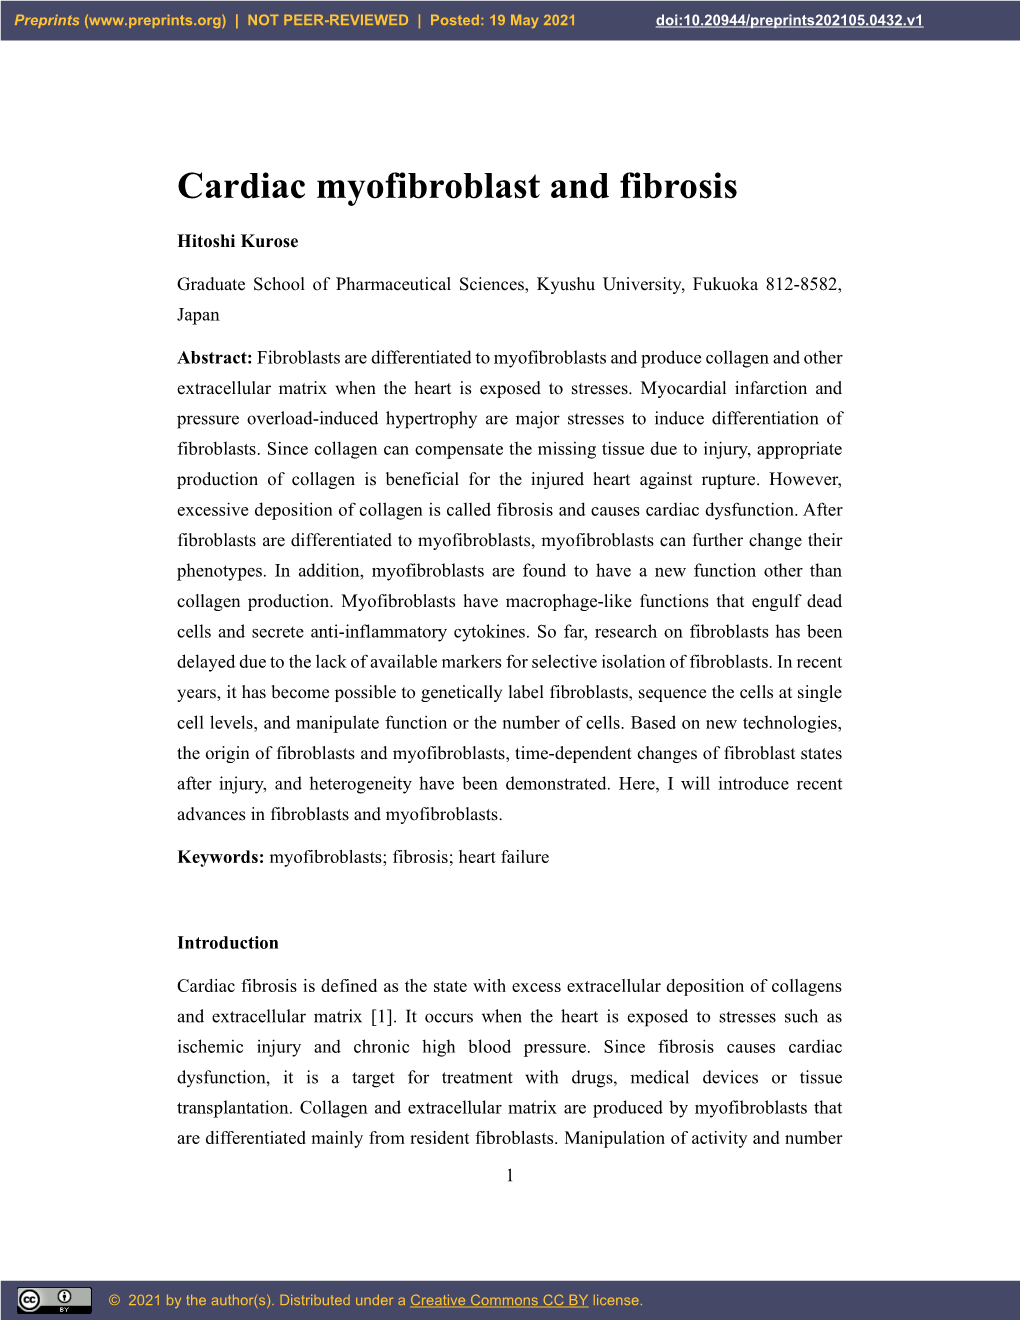 Cardiac Myofibroblast and Fibrosis